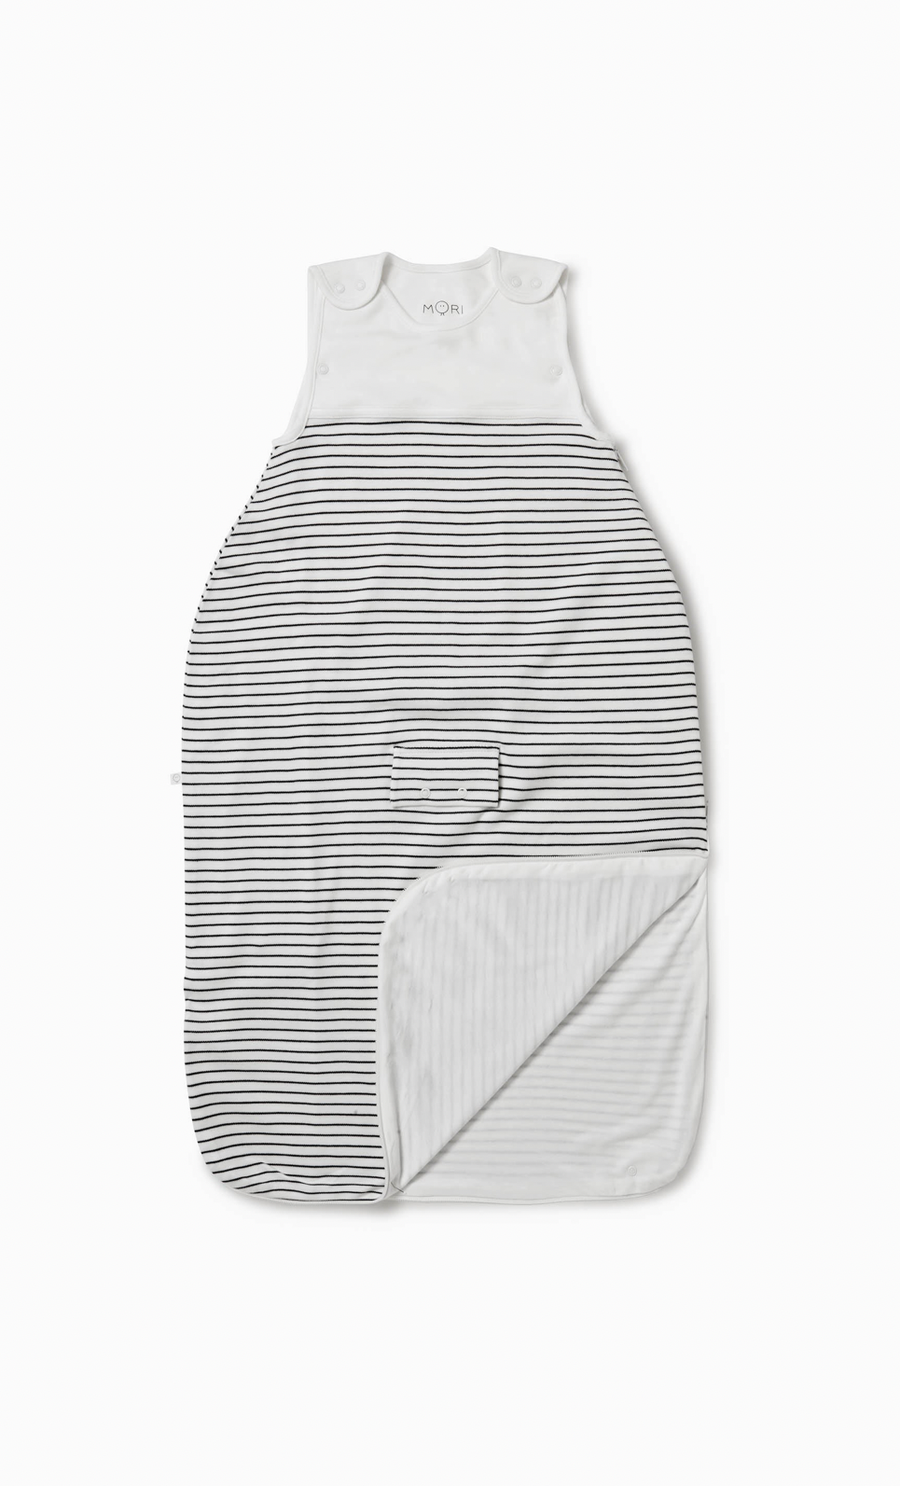 Clever Sleeping Bag 1.5 TOG - Grey Stripe